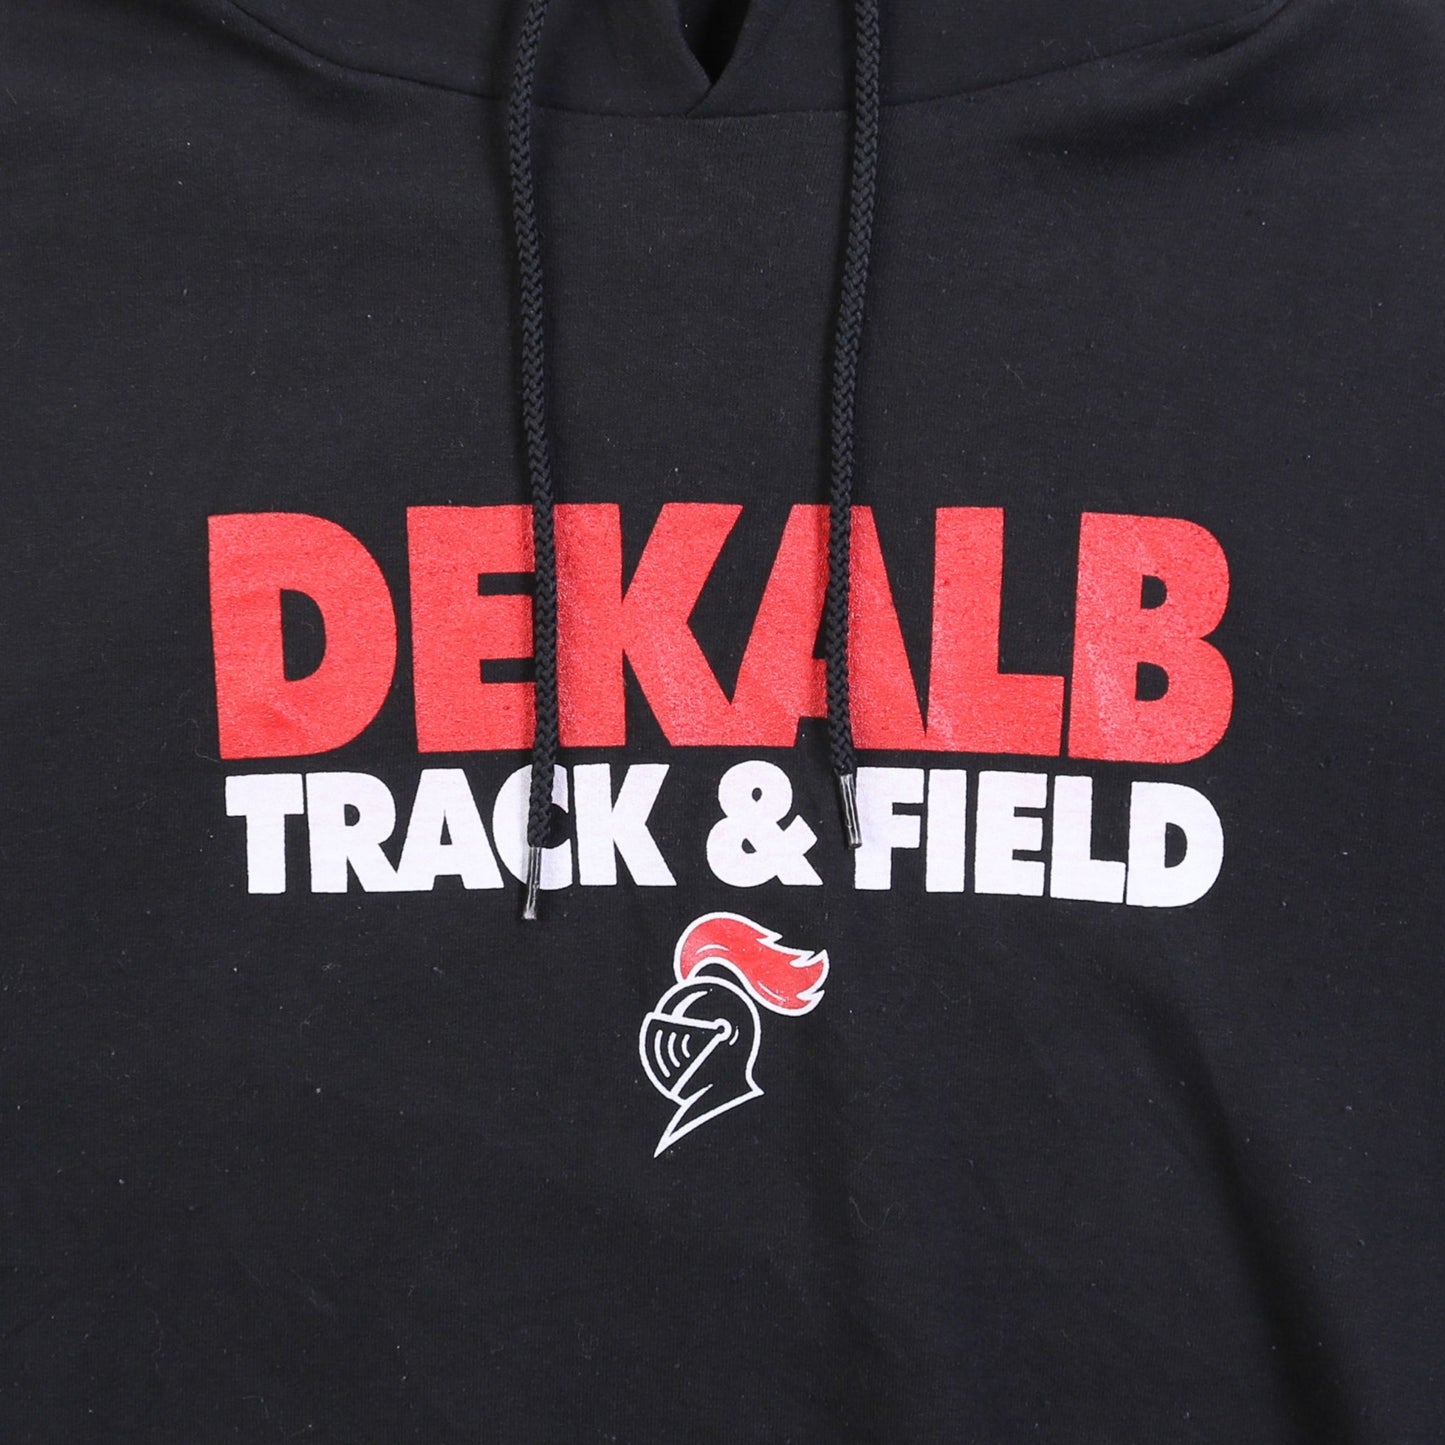 'DEKALB' Champion Hooded Sweatshirt - American Madness